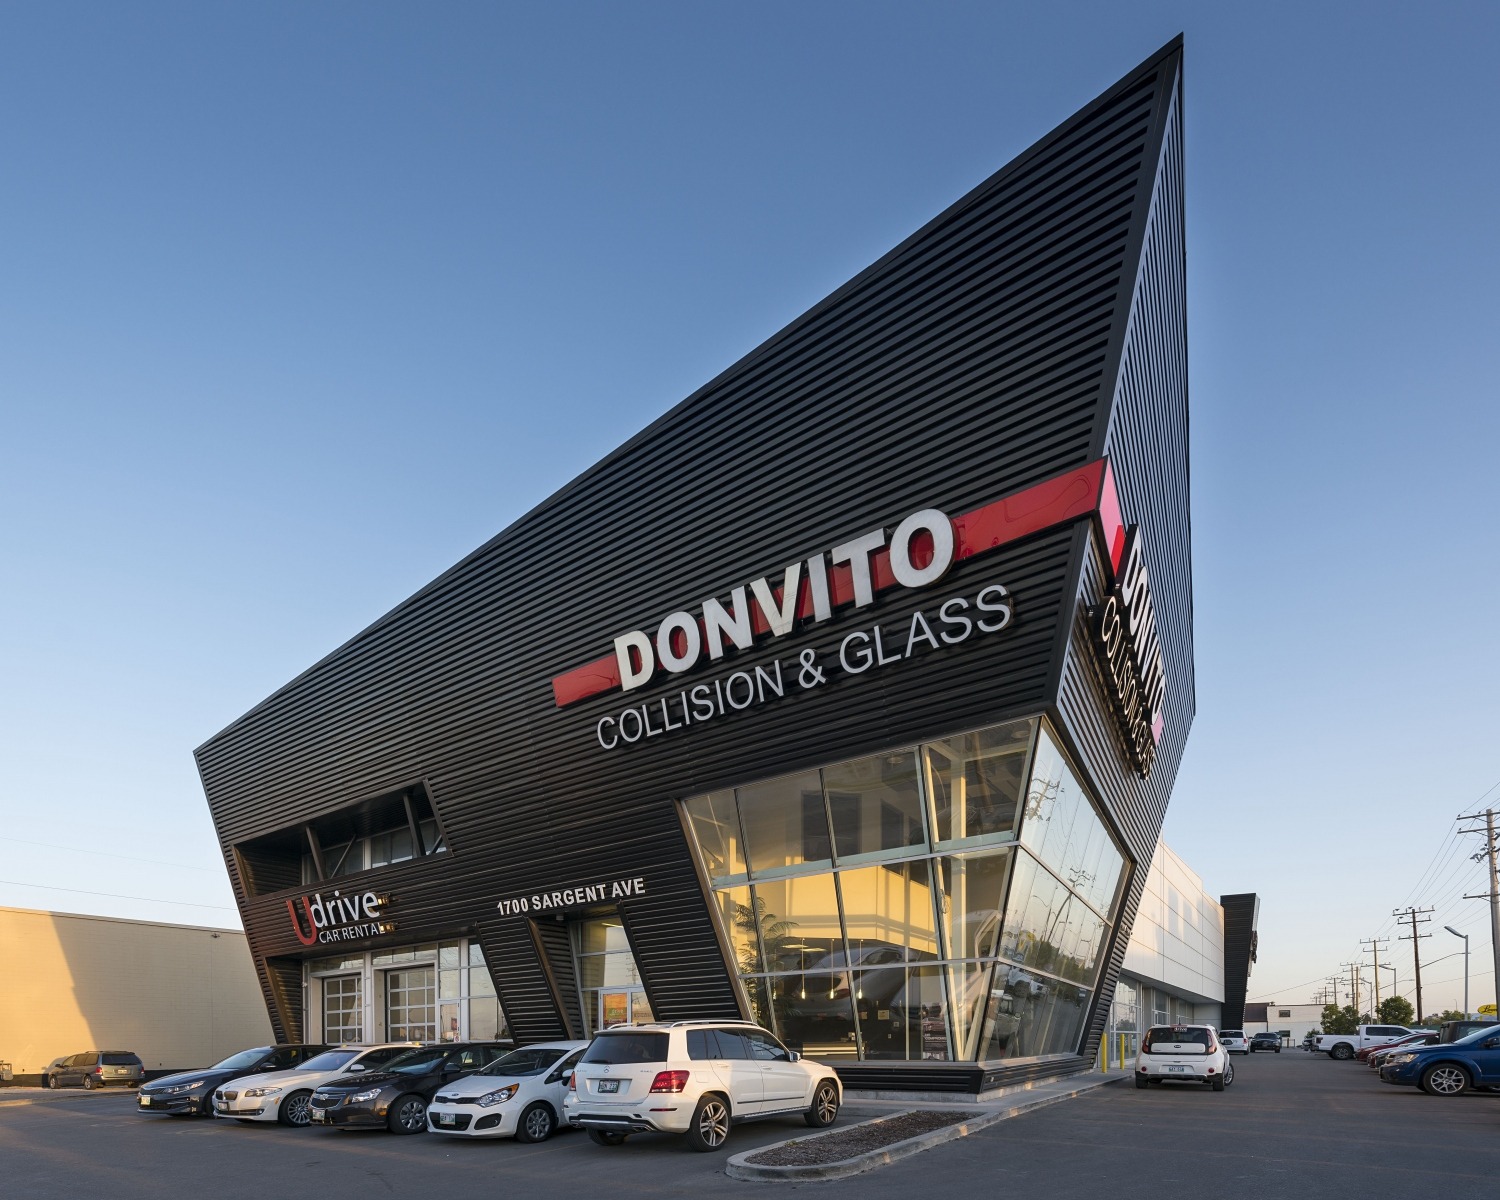 Donvito Automotive Group